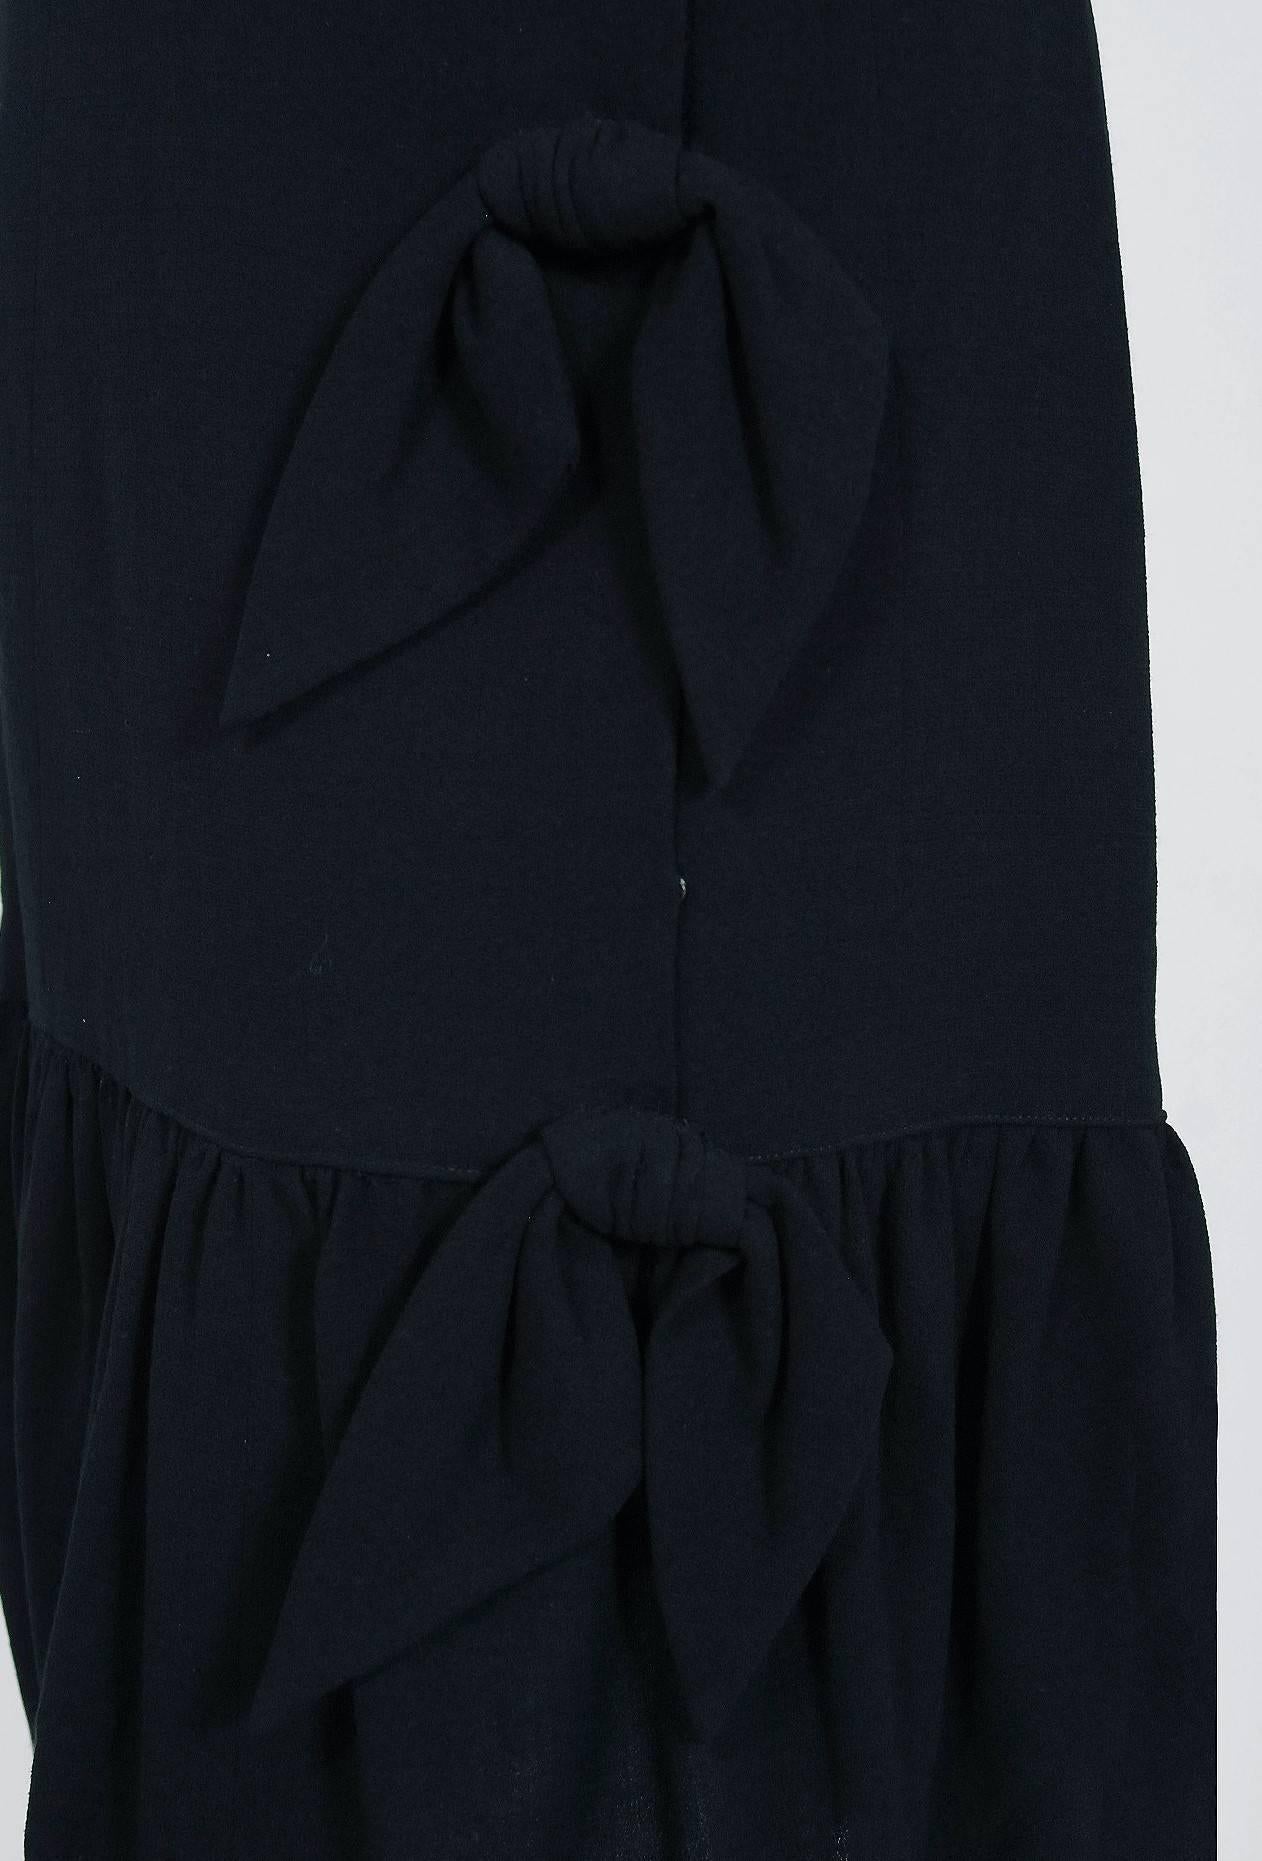 Women's 1957 Balenciaga Haute-Couture Black Wool Bow Trimmed Flounce Cocktail Dress